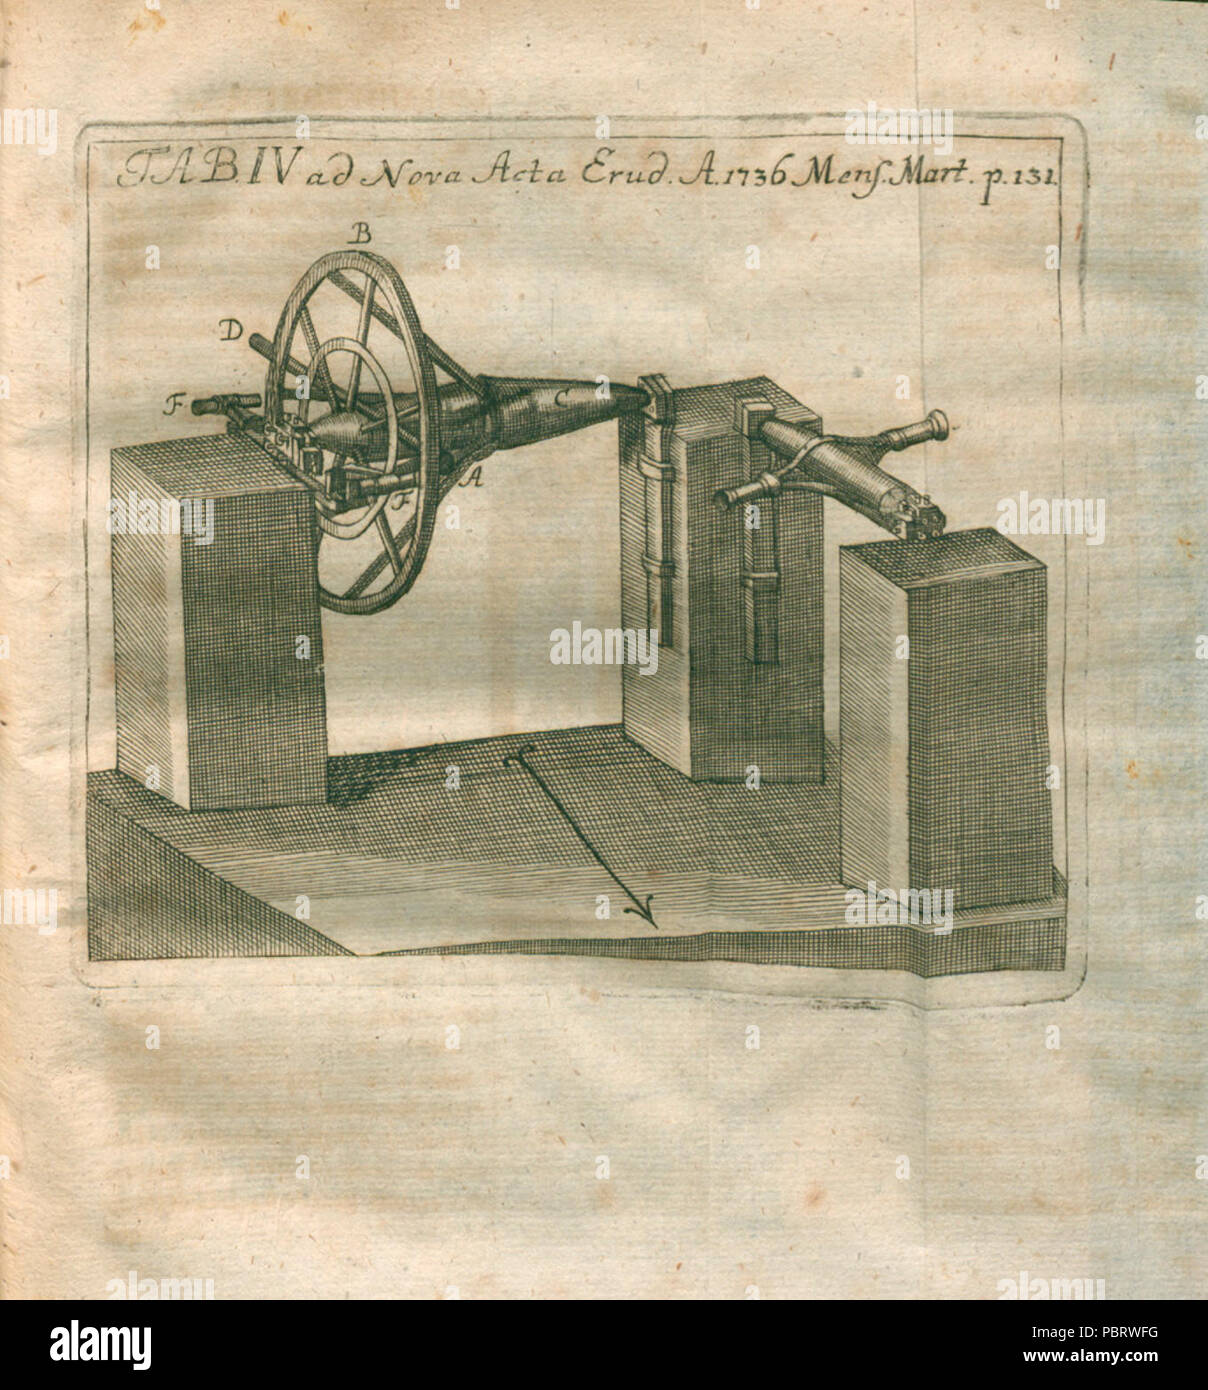 Acta Eruditorum-IV strumenti, 1736 - 13456523 BEIC. Stockfoto